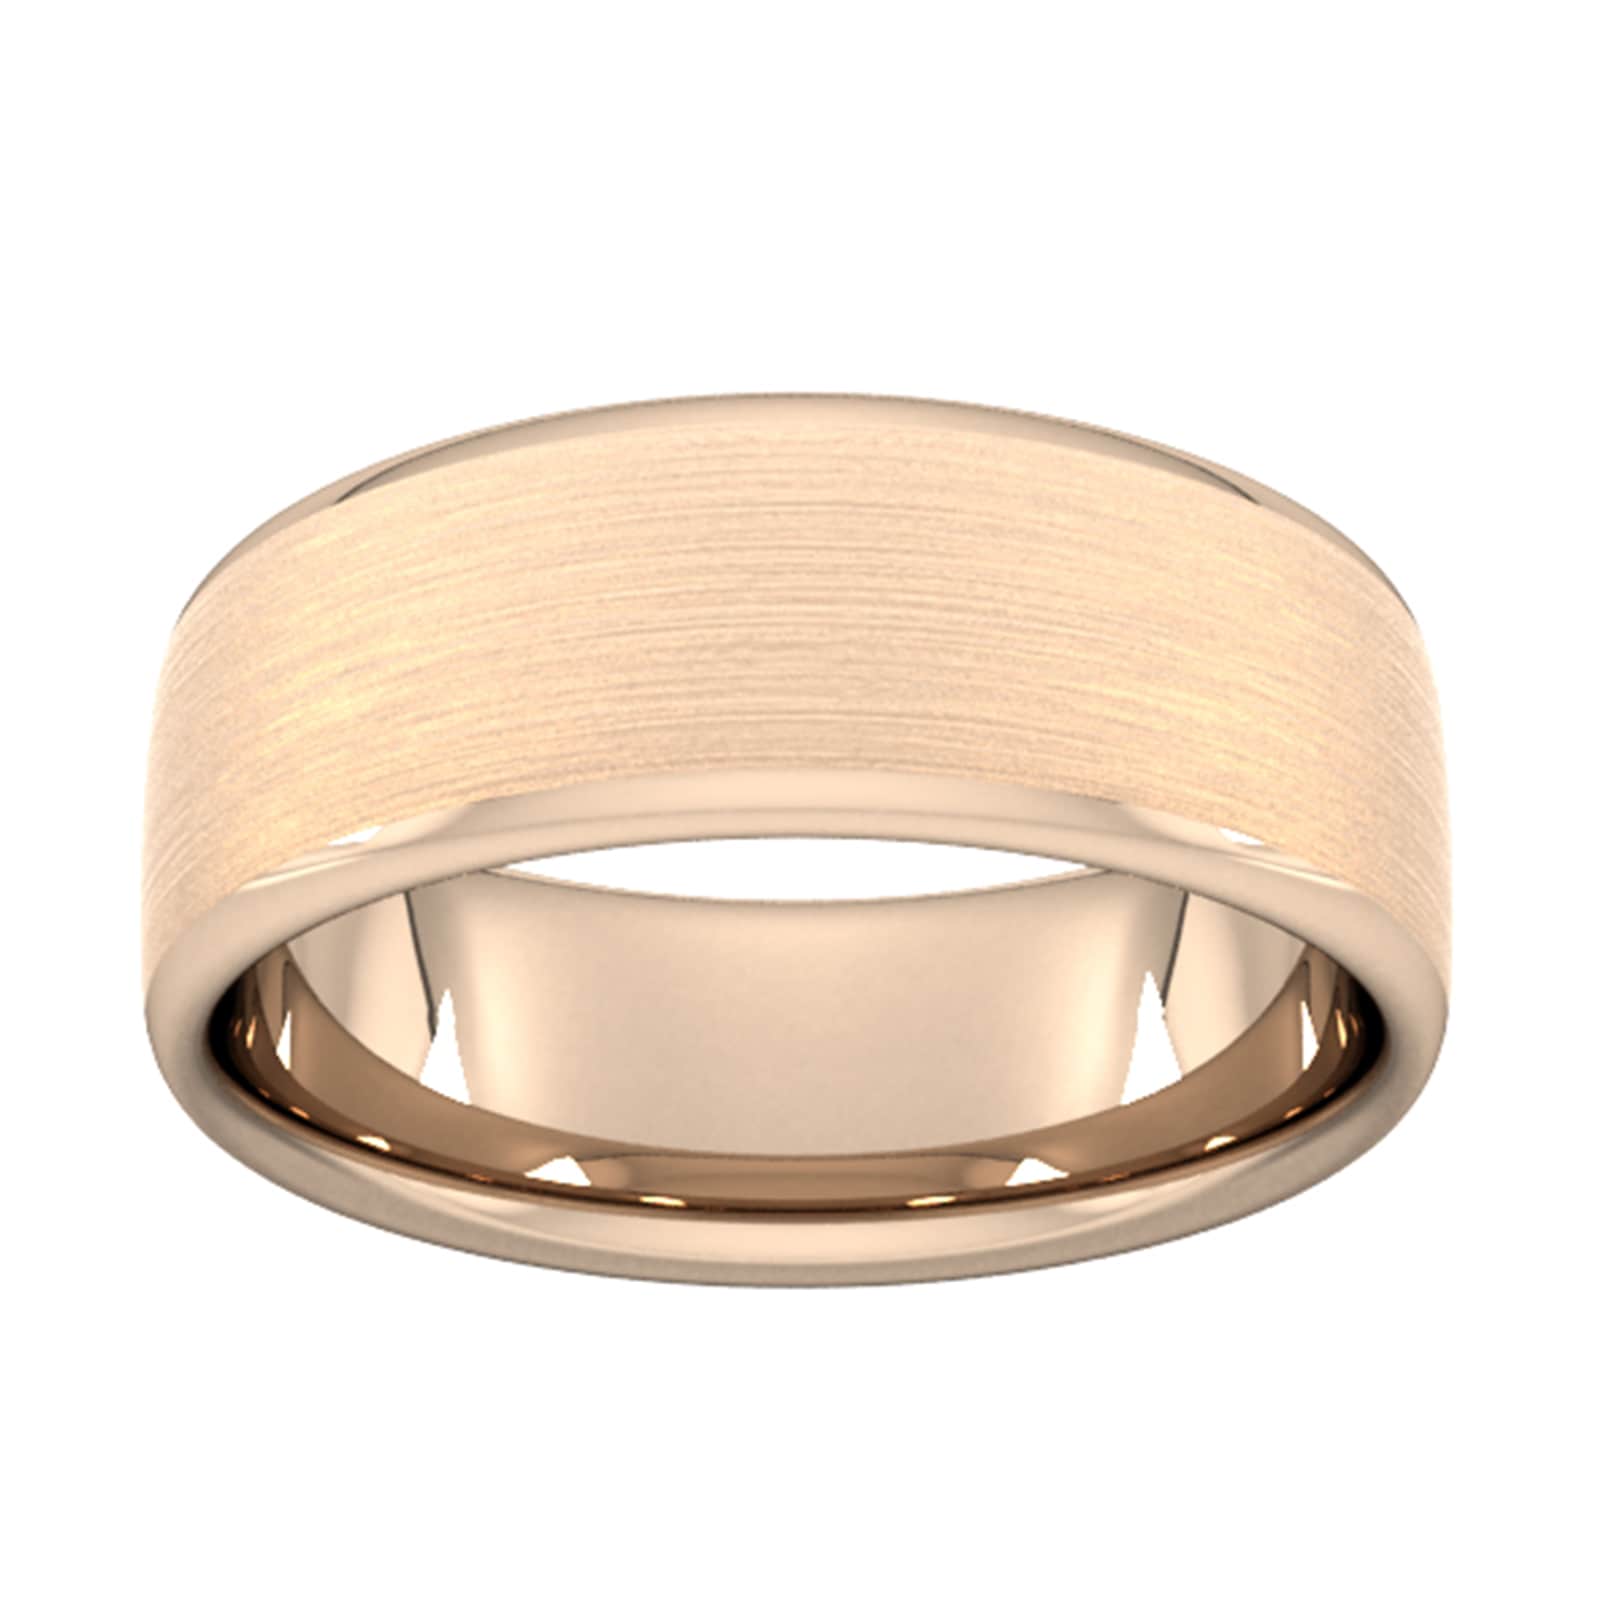 8mm D Shape Standard Matt Finished Wedding Ring In 18 Carat Rose Gold - Ring Size P